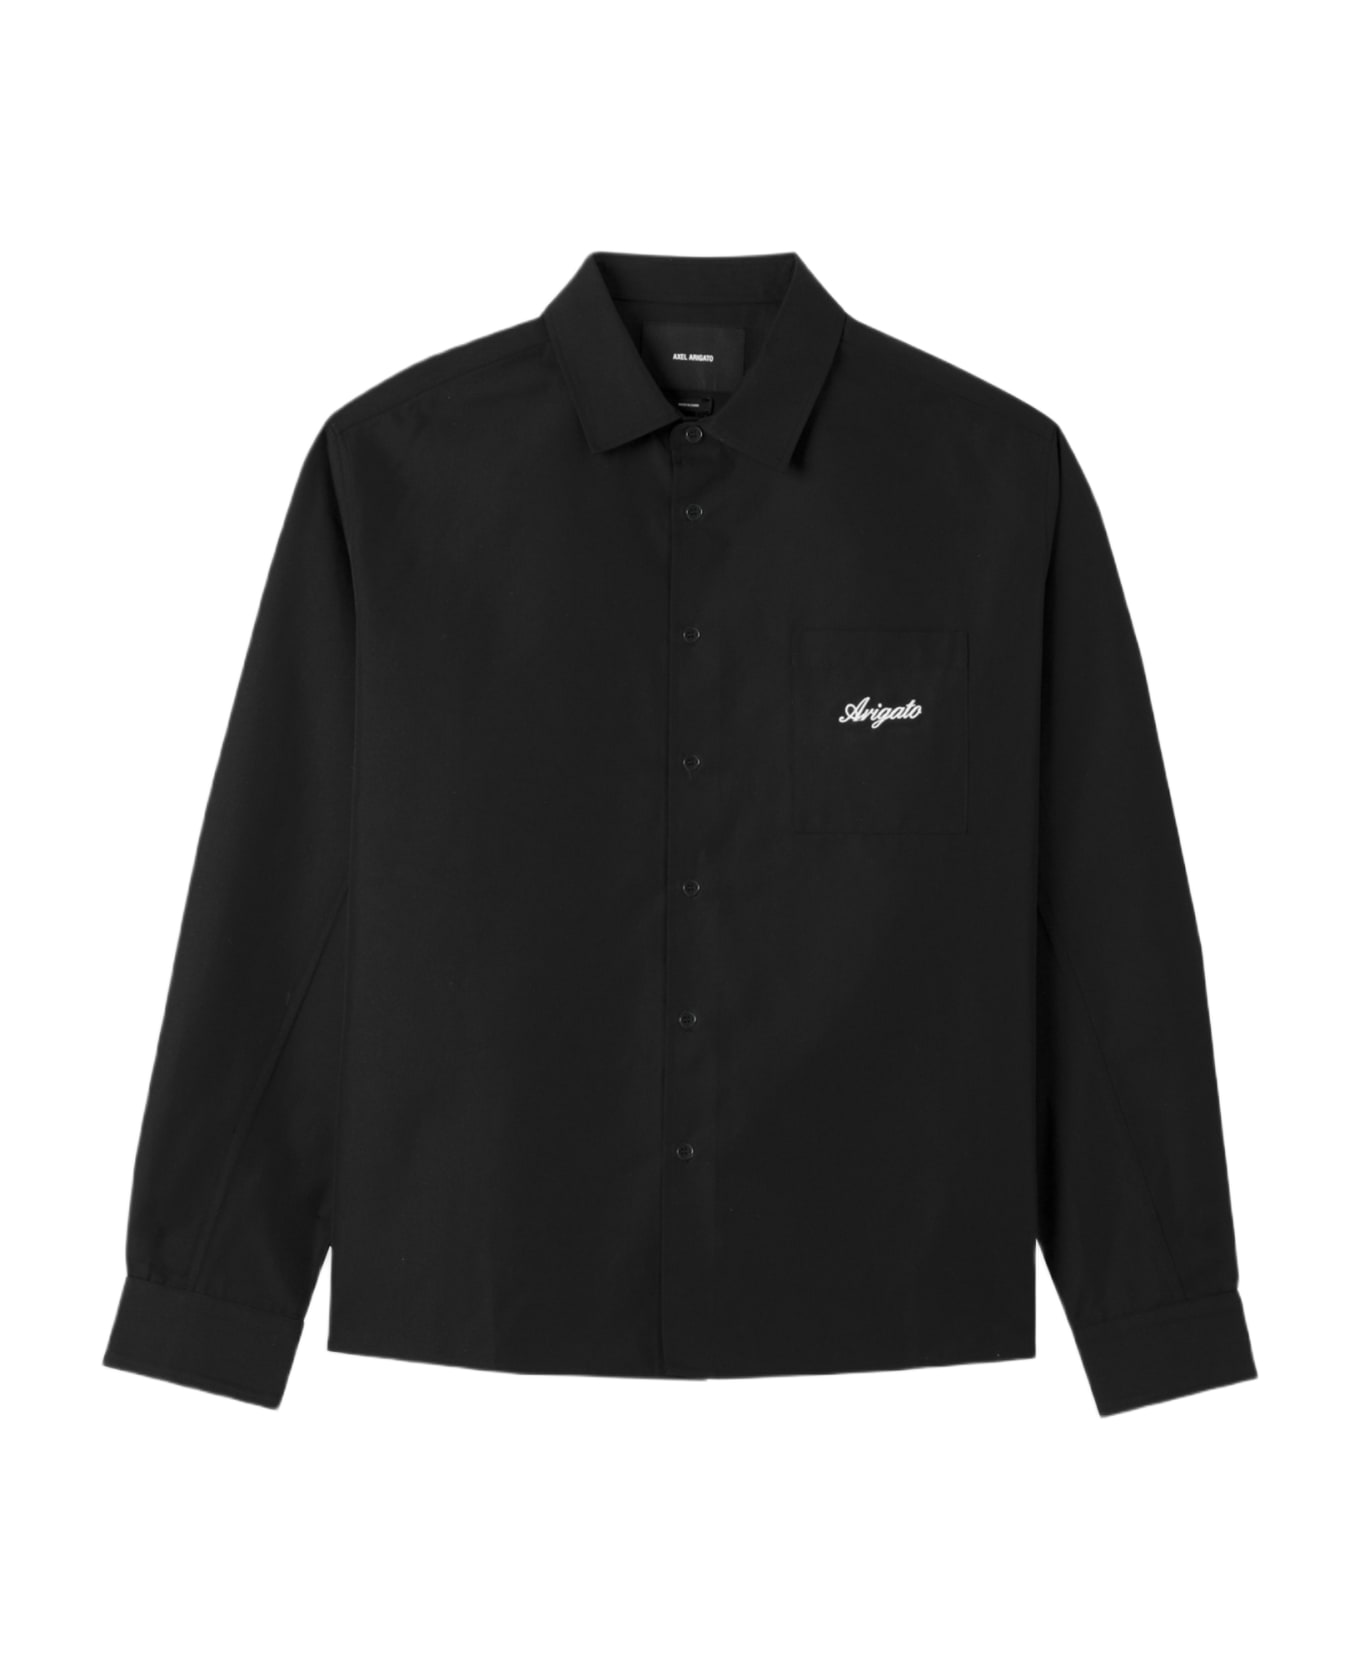 Axel Arigato Flow Overshirt Black shirt with chest pocket and logo - Flow overshirt - Nero